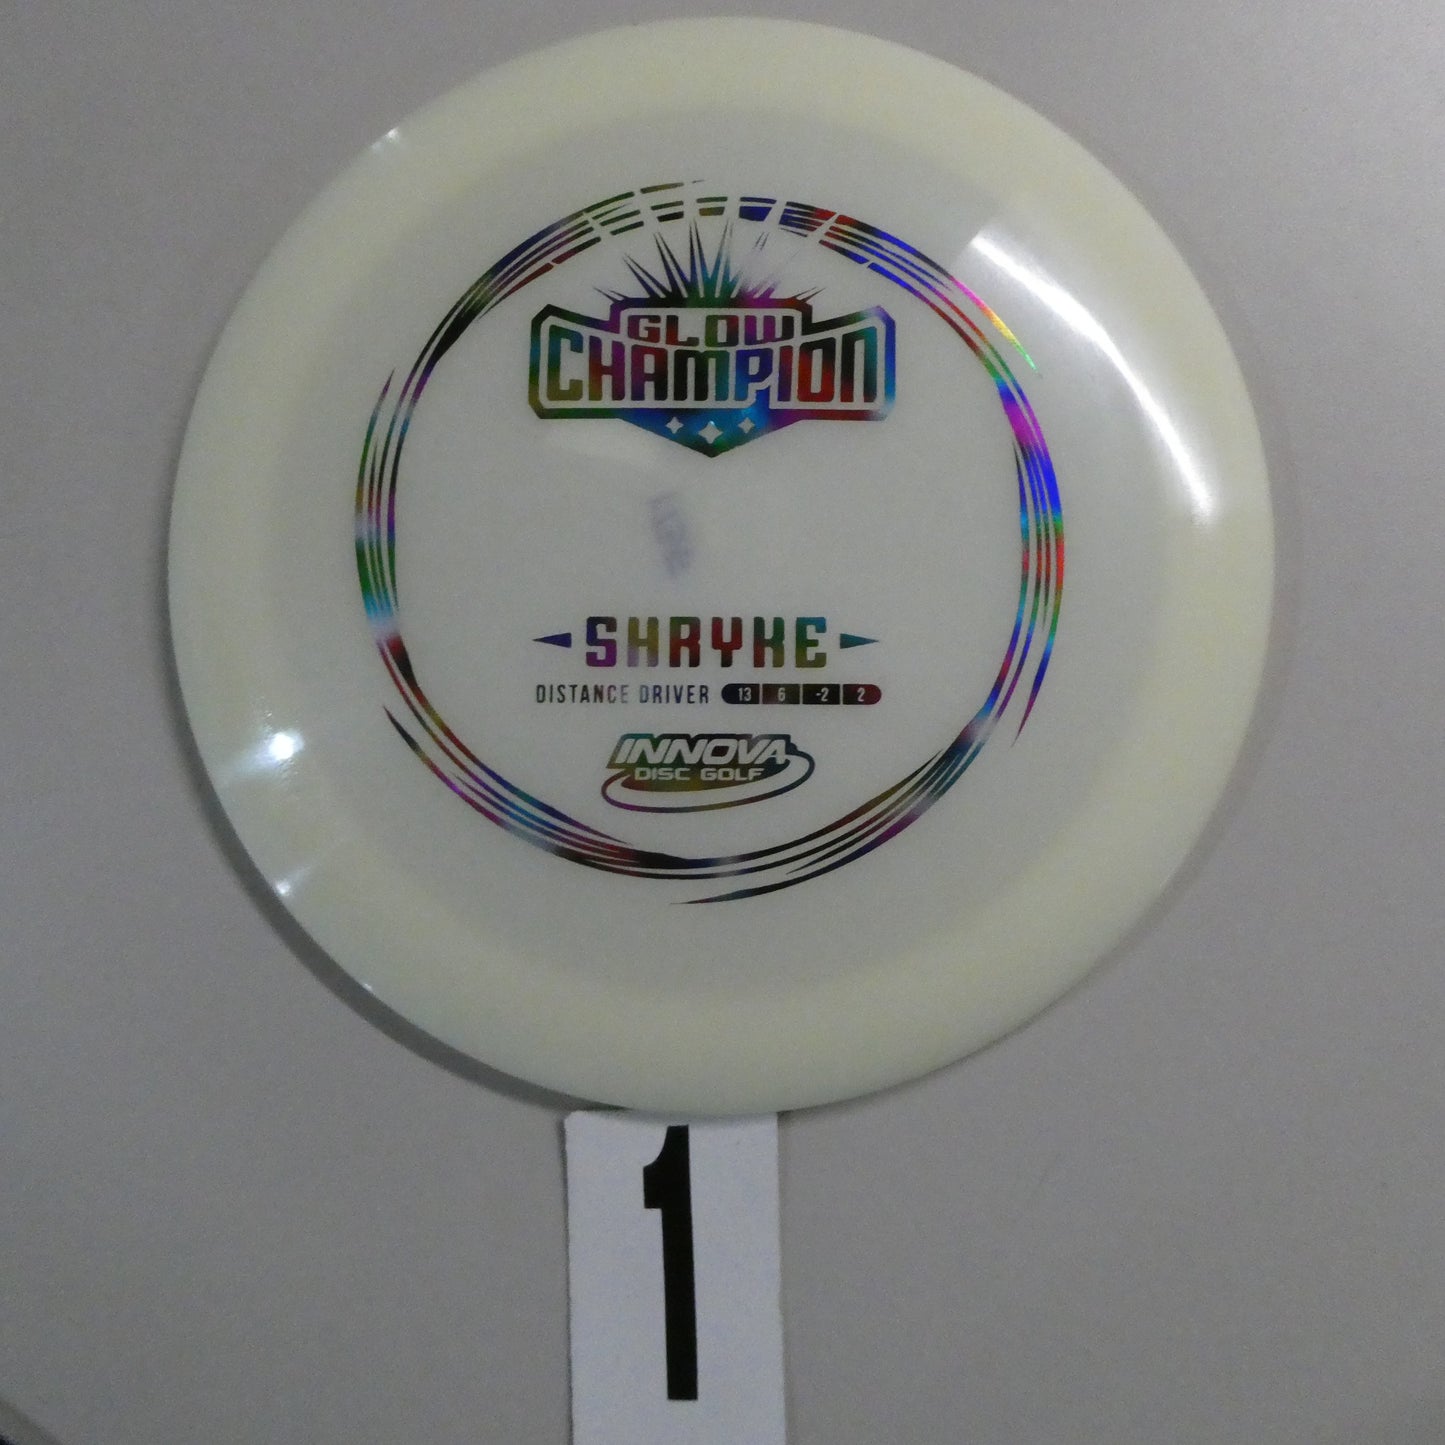 Glow Champion Shryke